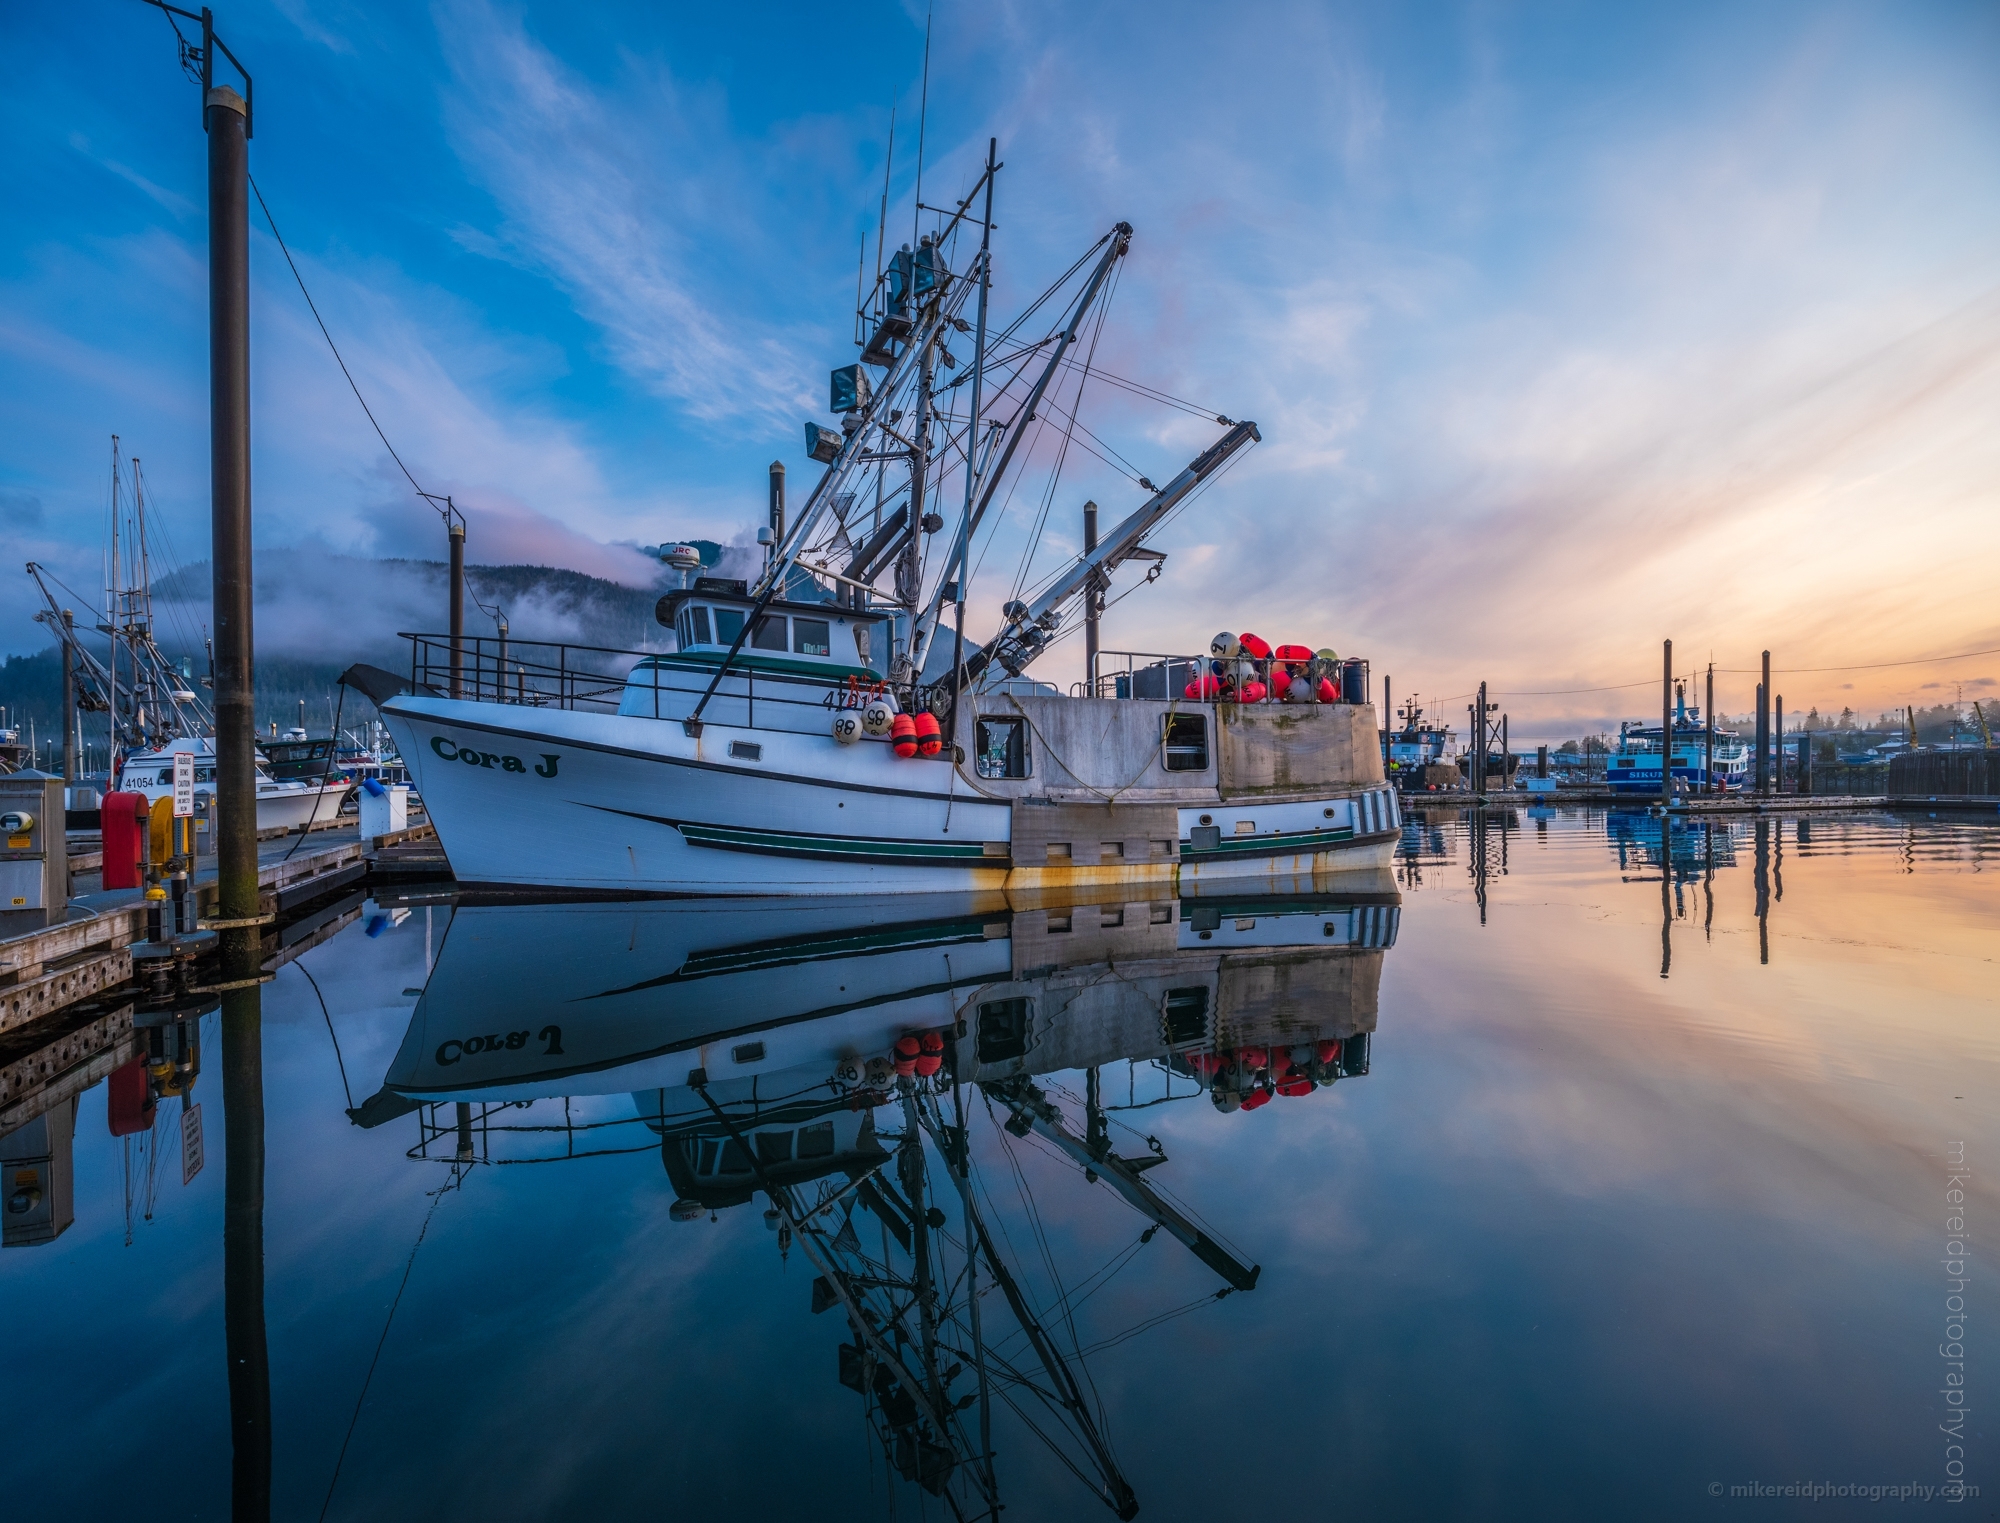 Petersburg Alaska Fishing Boat Reflection